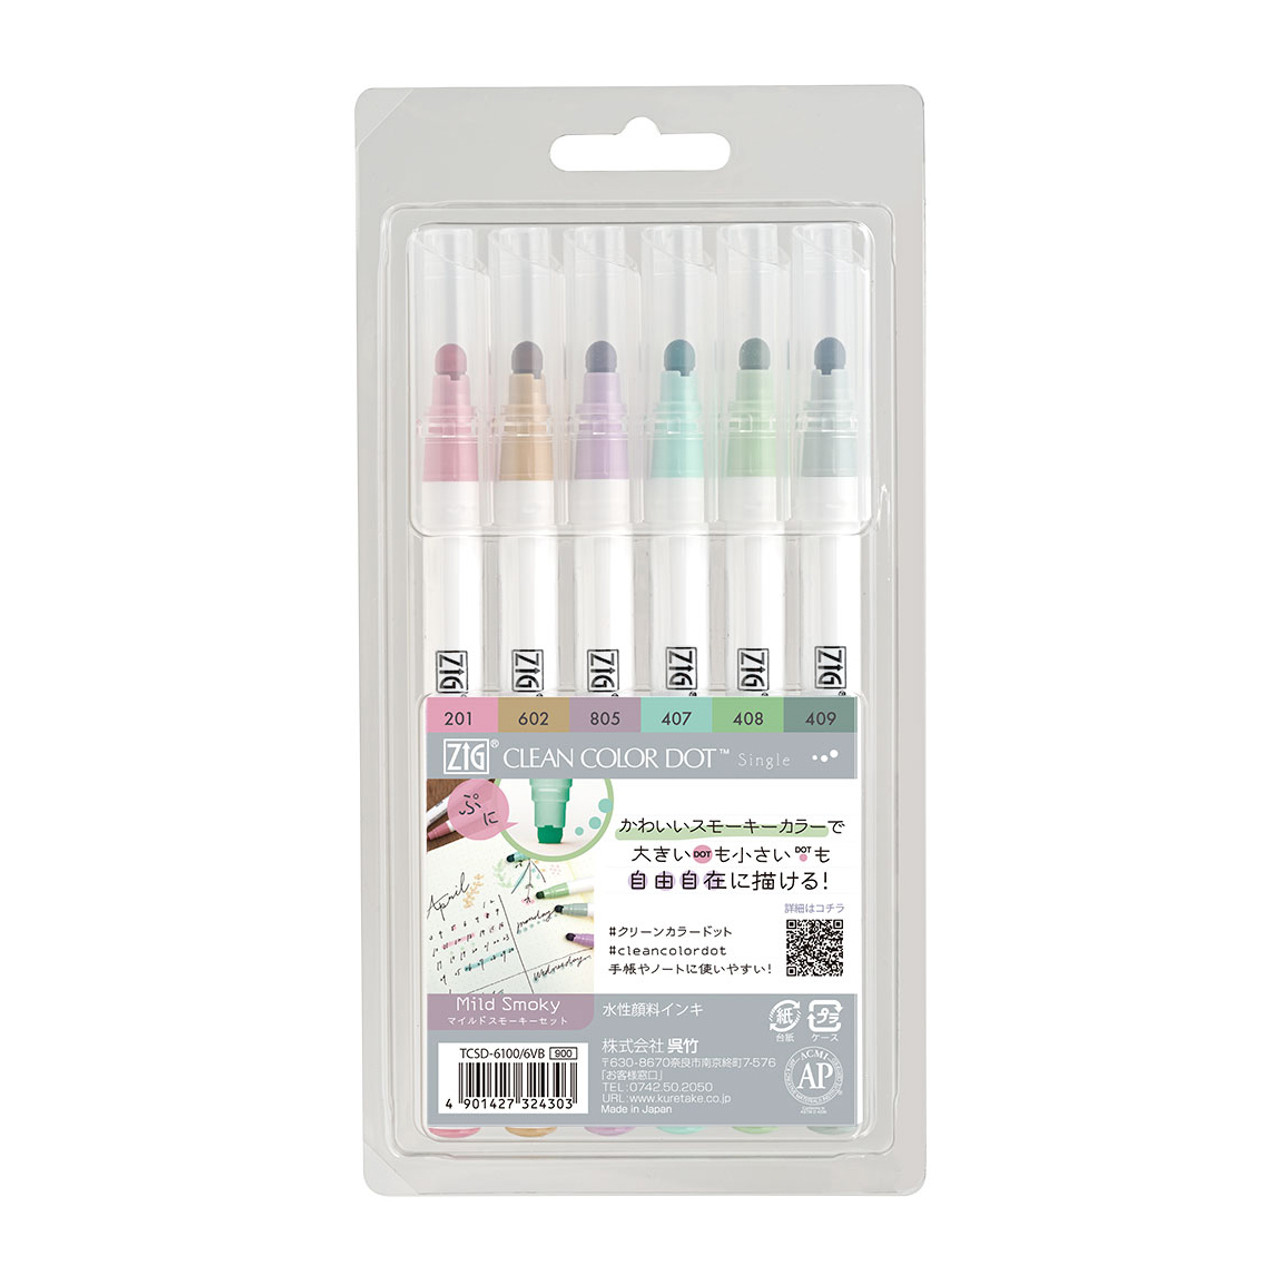 Zig Clean Color DOT Single-Ended Marker, Set of 6 Mild Smoky Colors